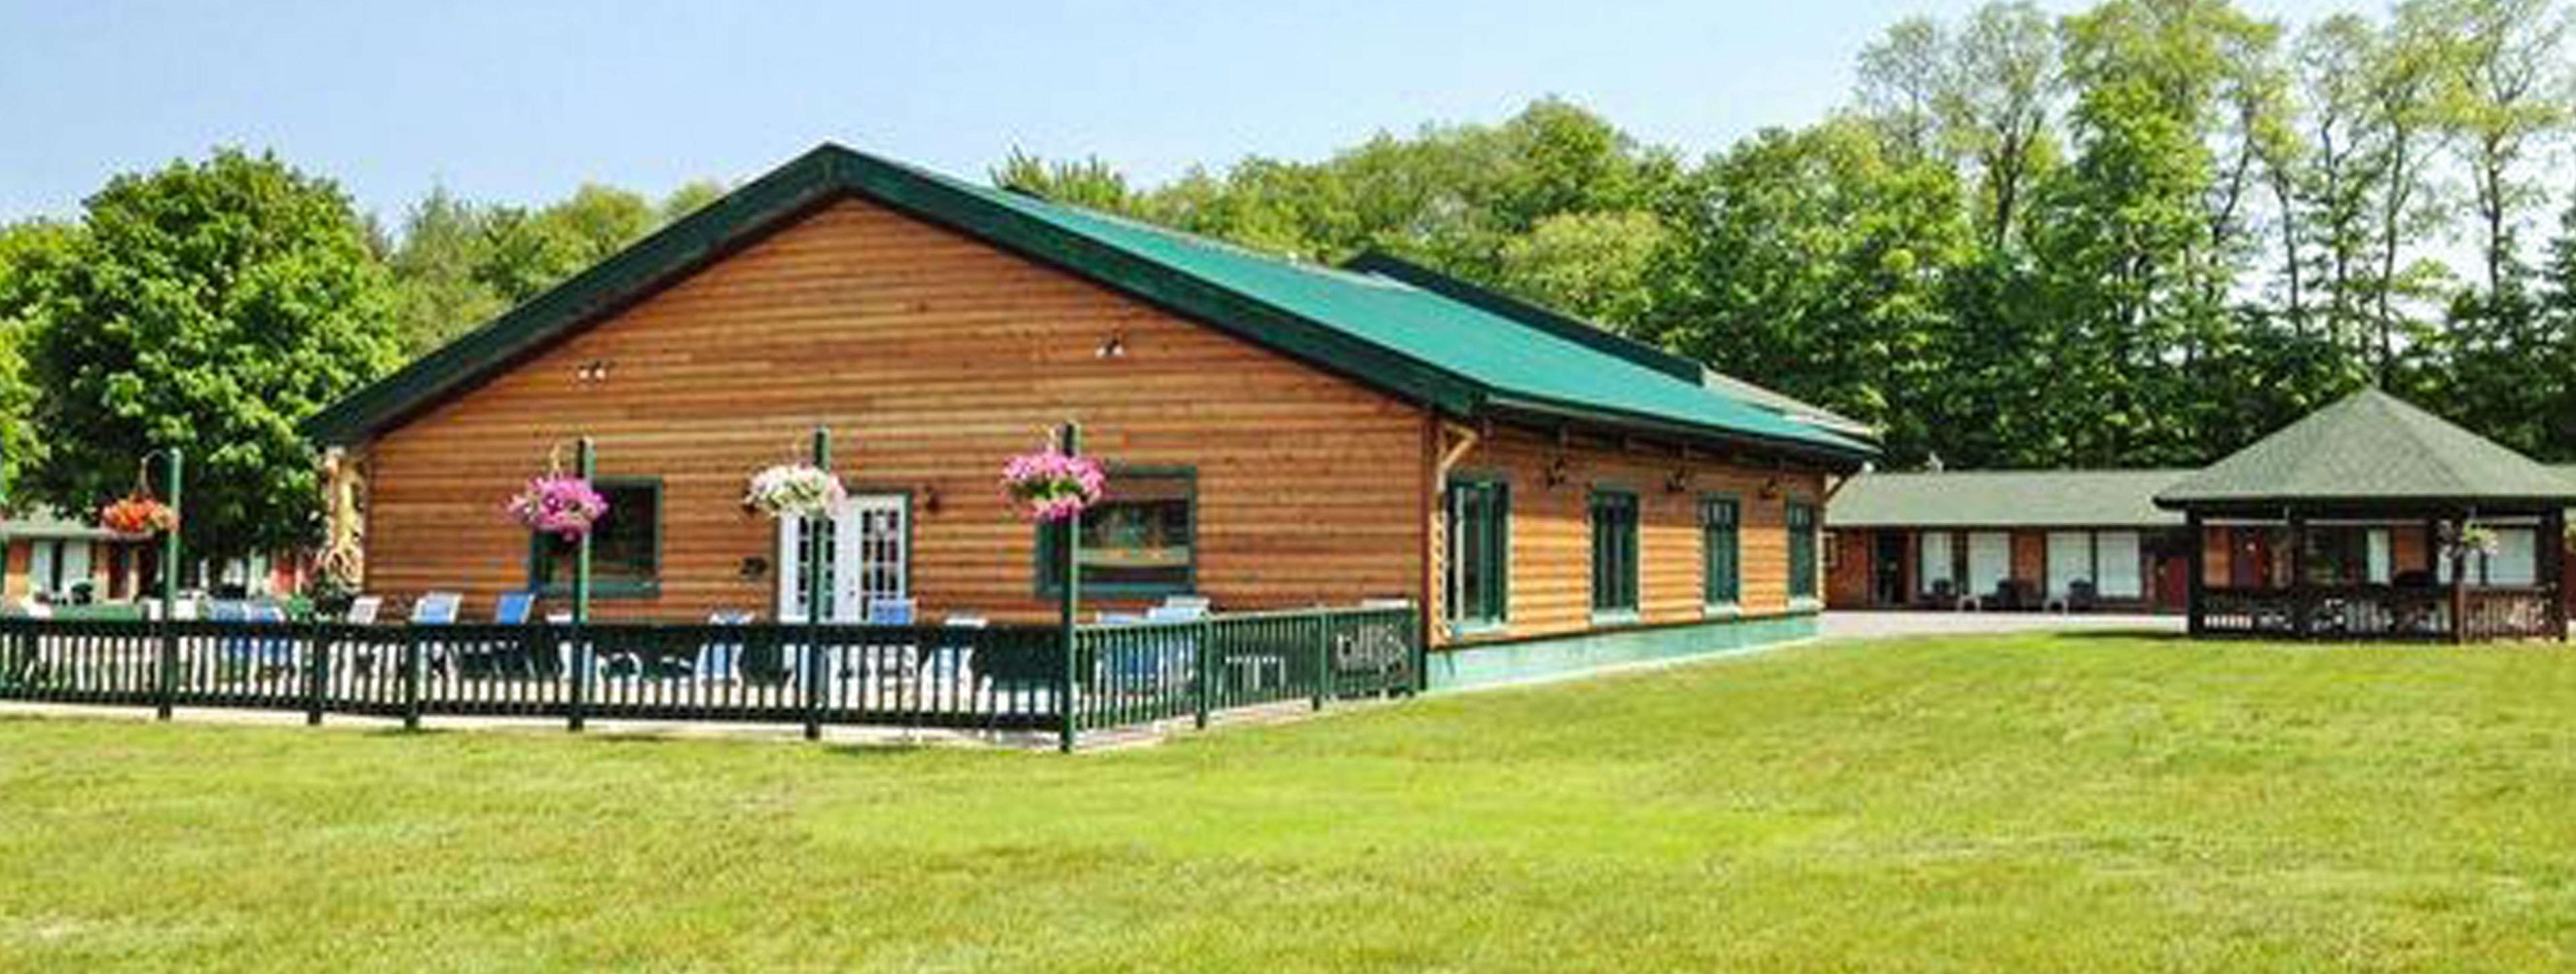 Adirondack Lodge Old Forge